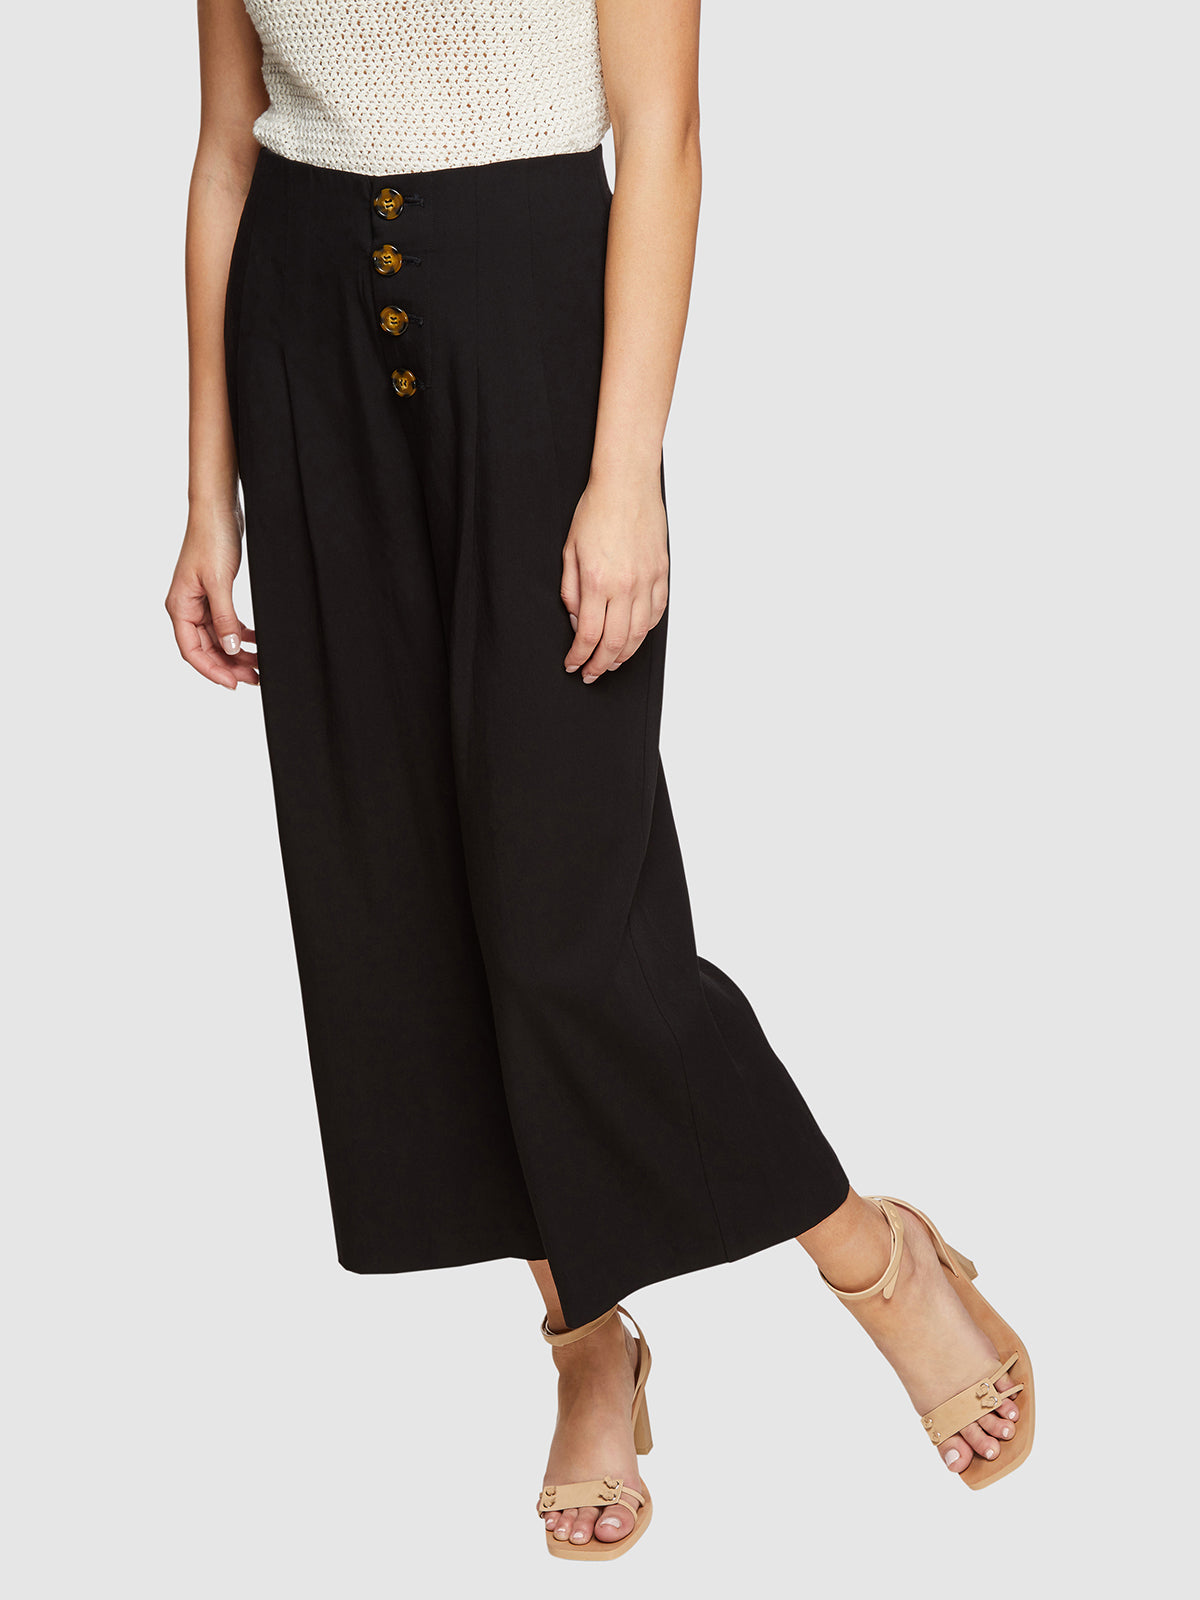 Kazo Trousers and Pants  Buy Kazo Black Trouser With Button Detail Online   Nykaa Fashion